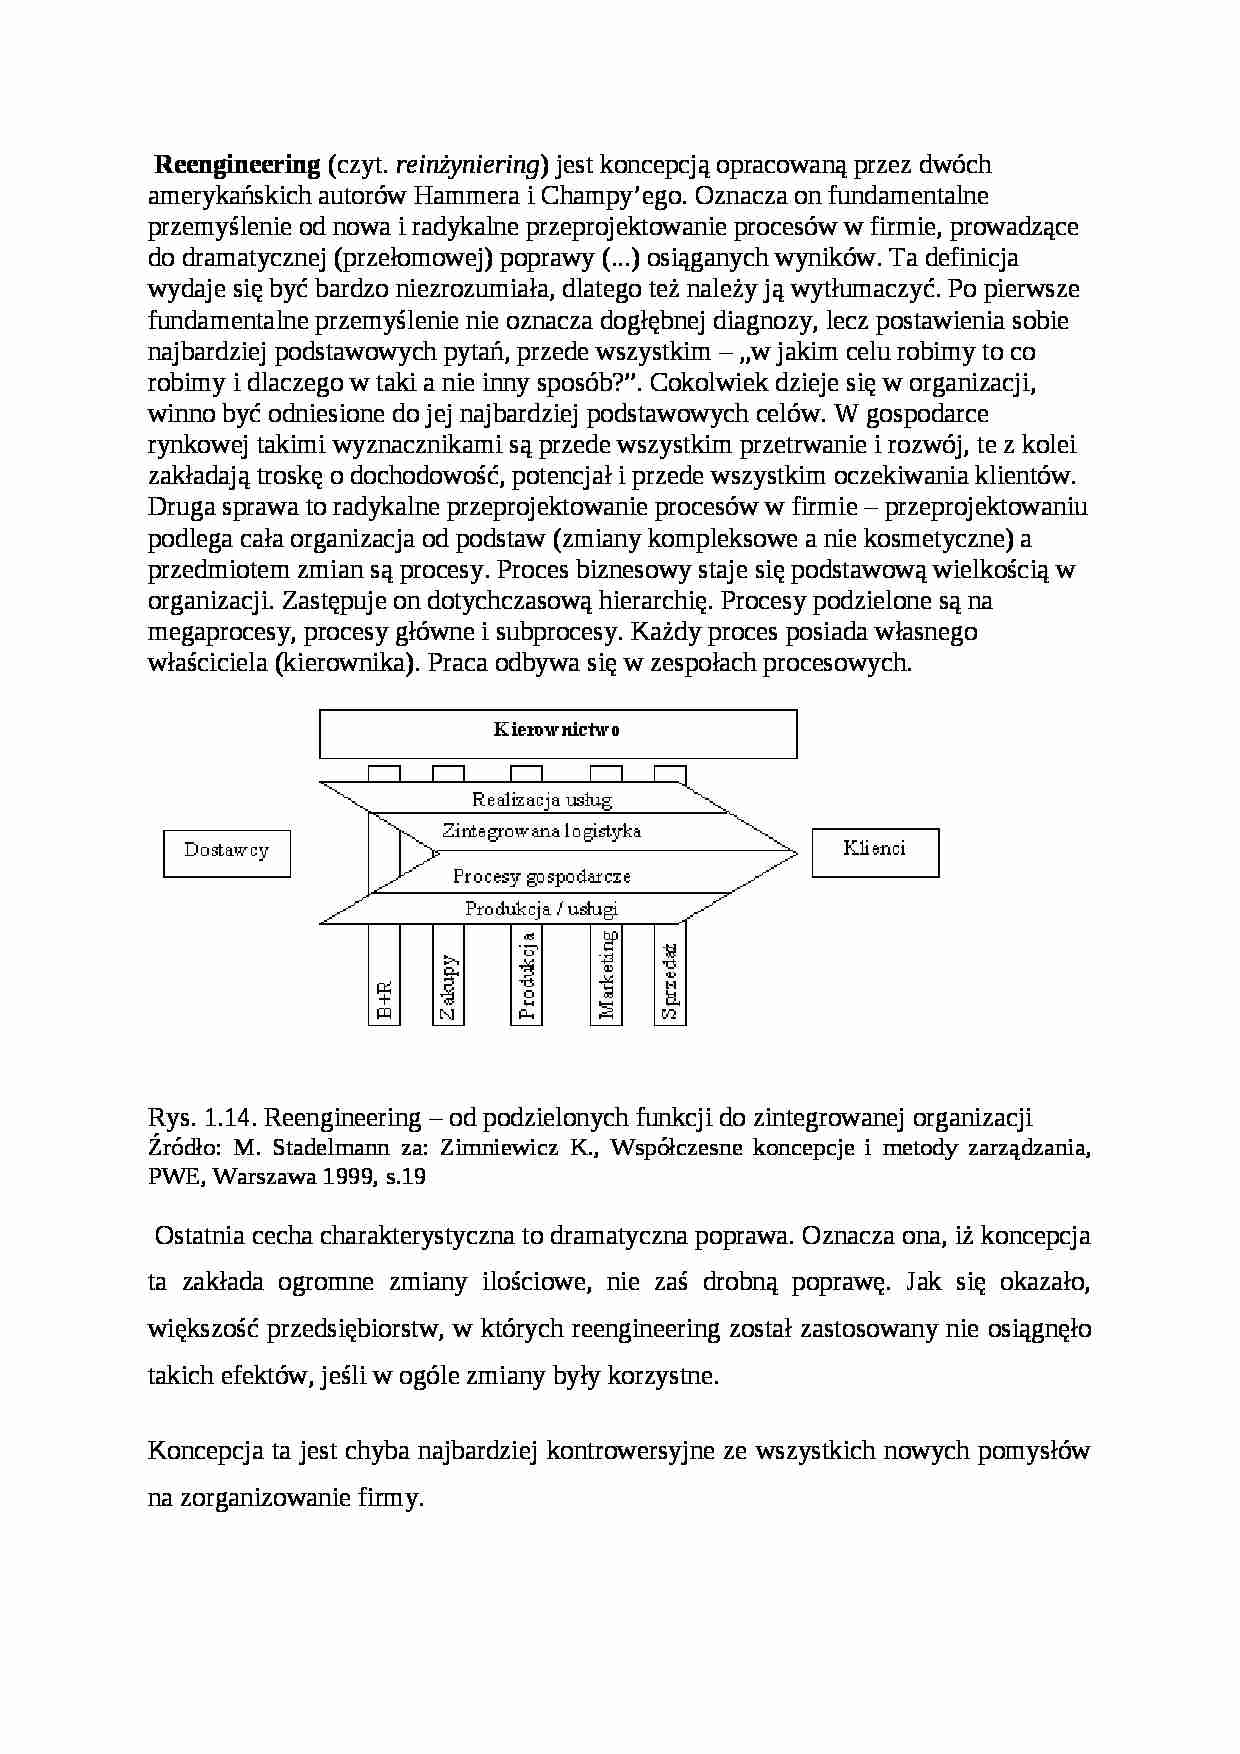 metody zarządzania - Reengineering  - strona 1